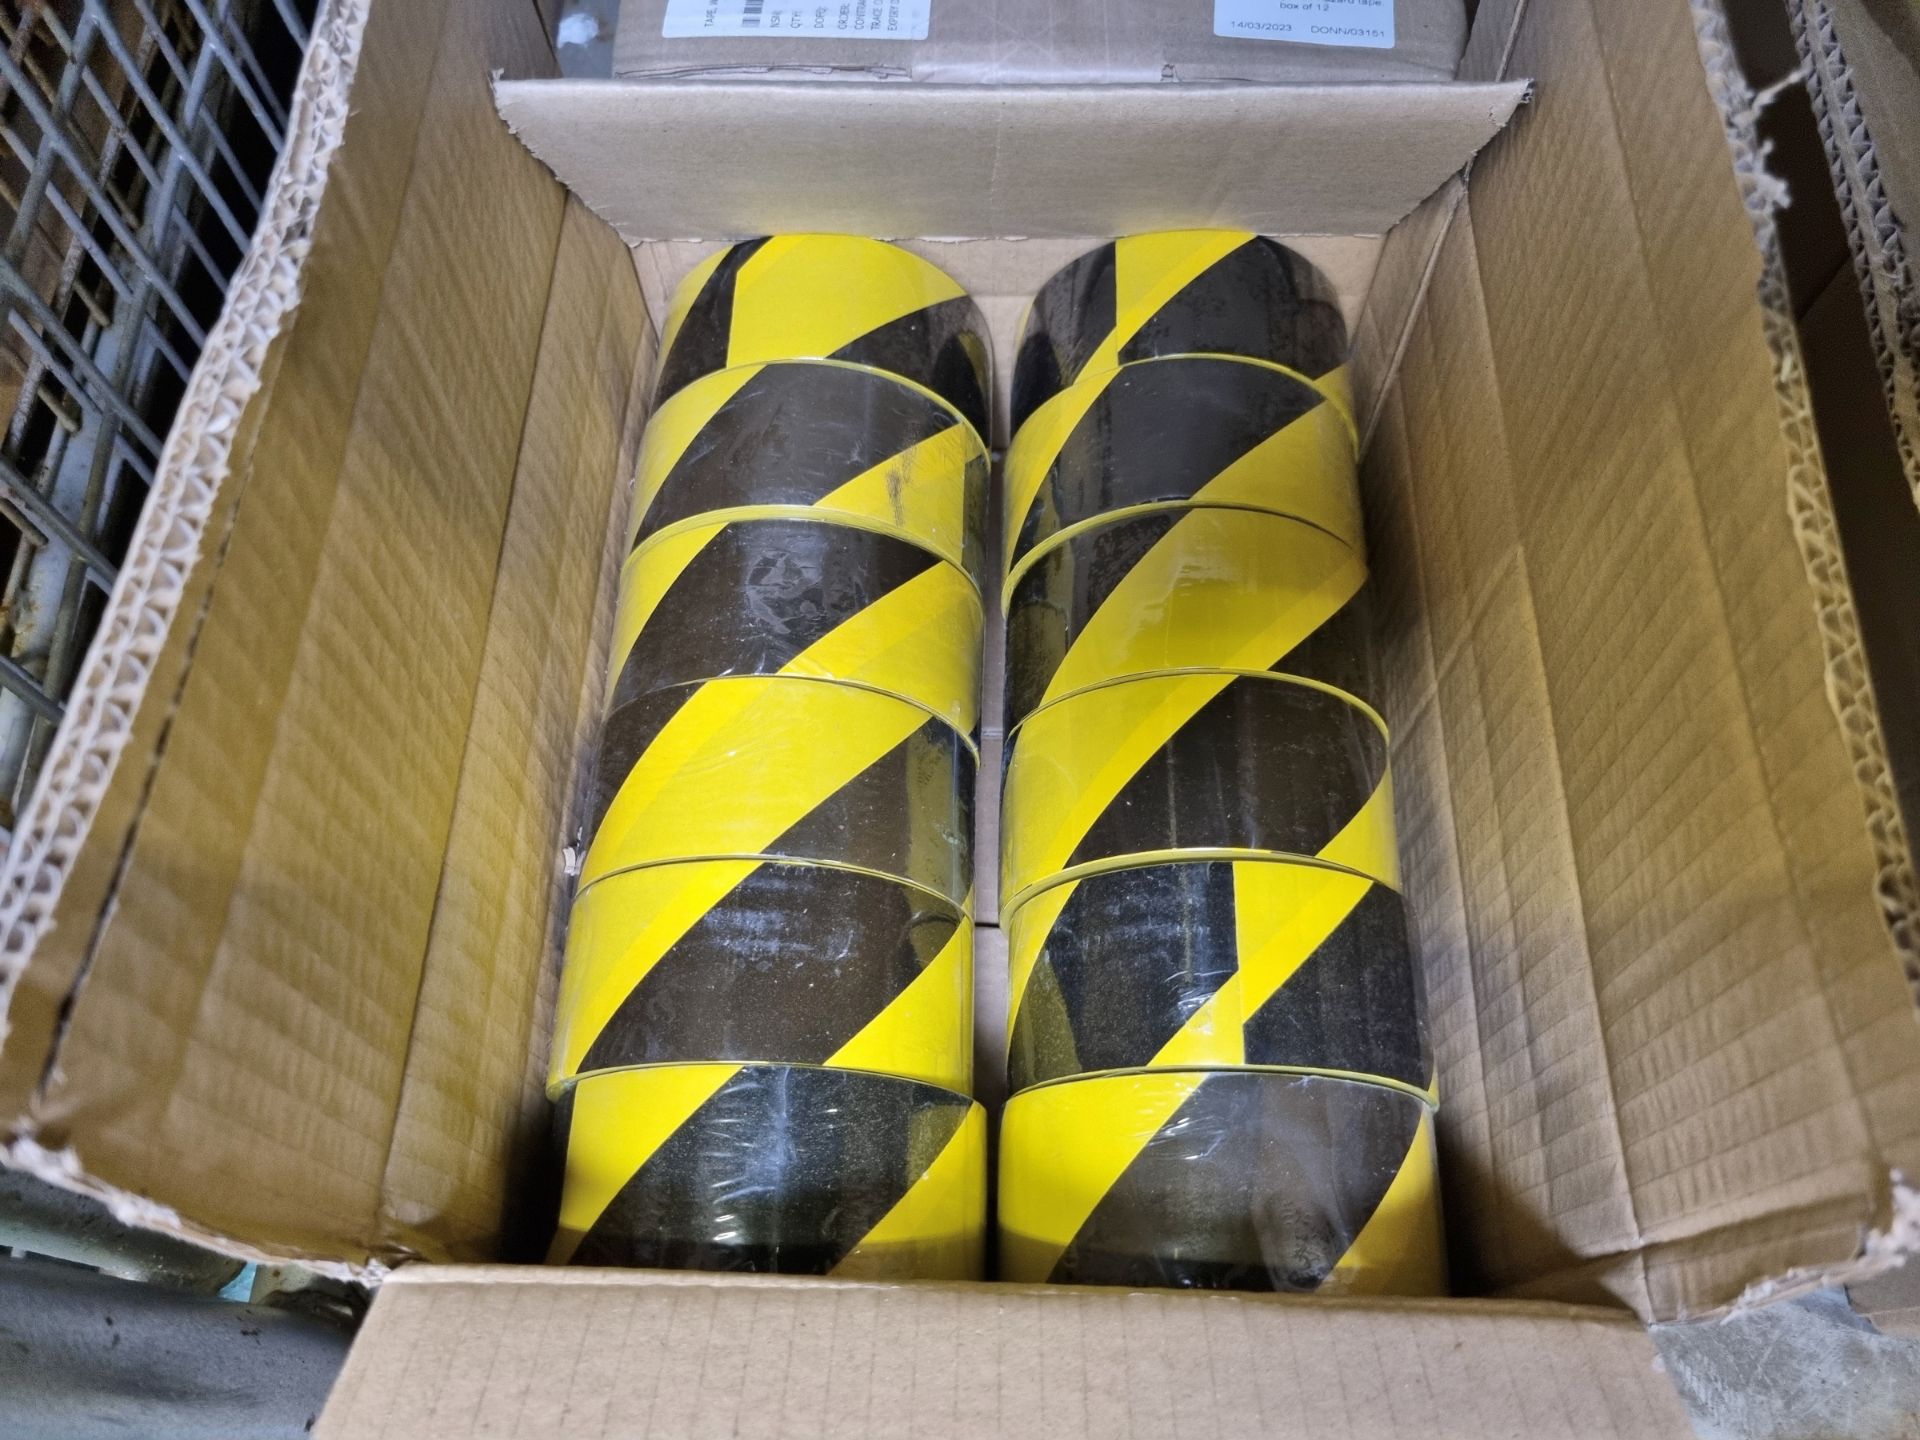 3x boxes of Black and yellow hazard tape - 12 rolls per box - Bild 3 aus 4